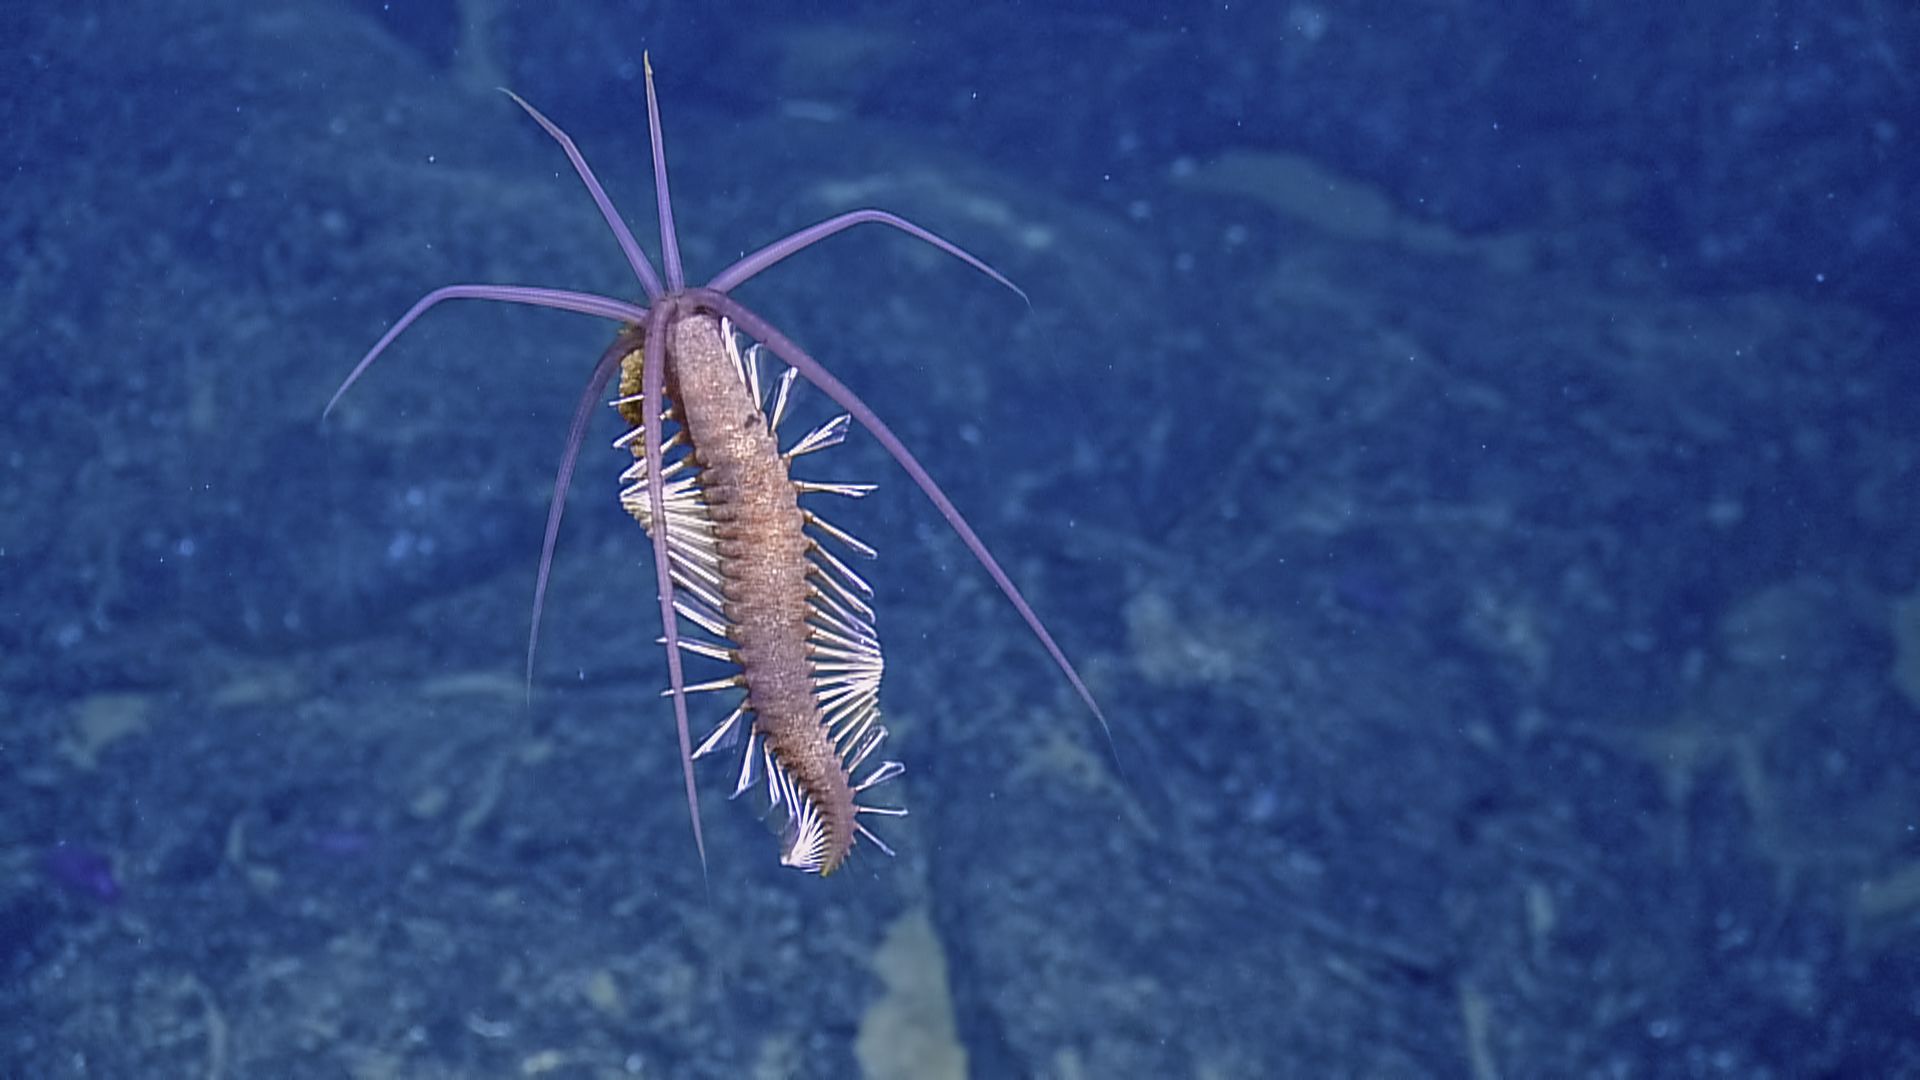 Rare deep sea creature spotted | CNN